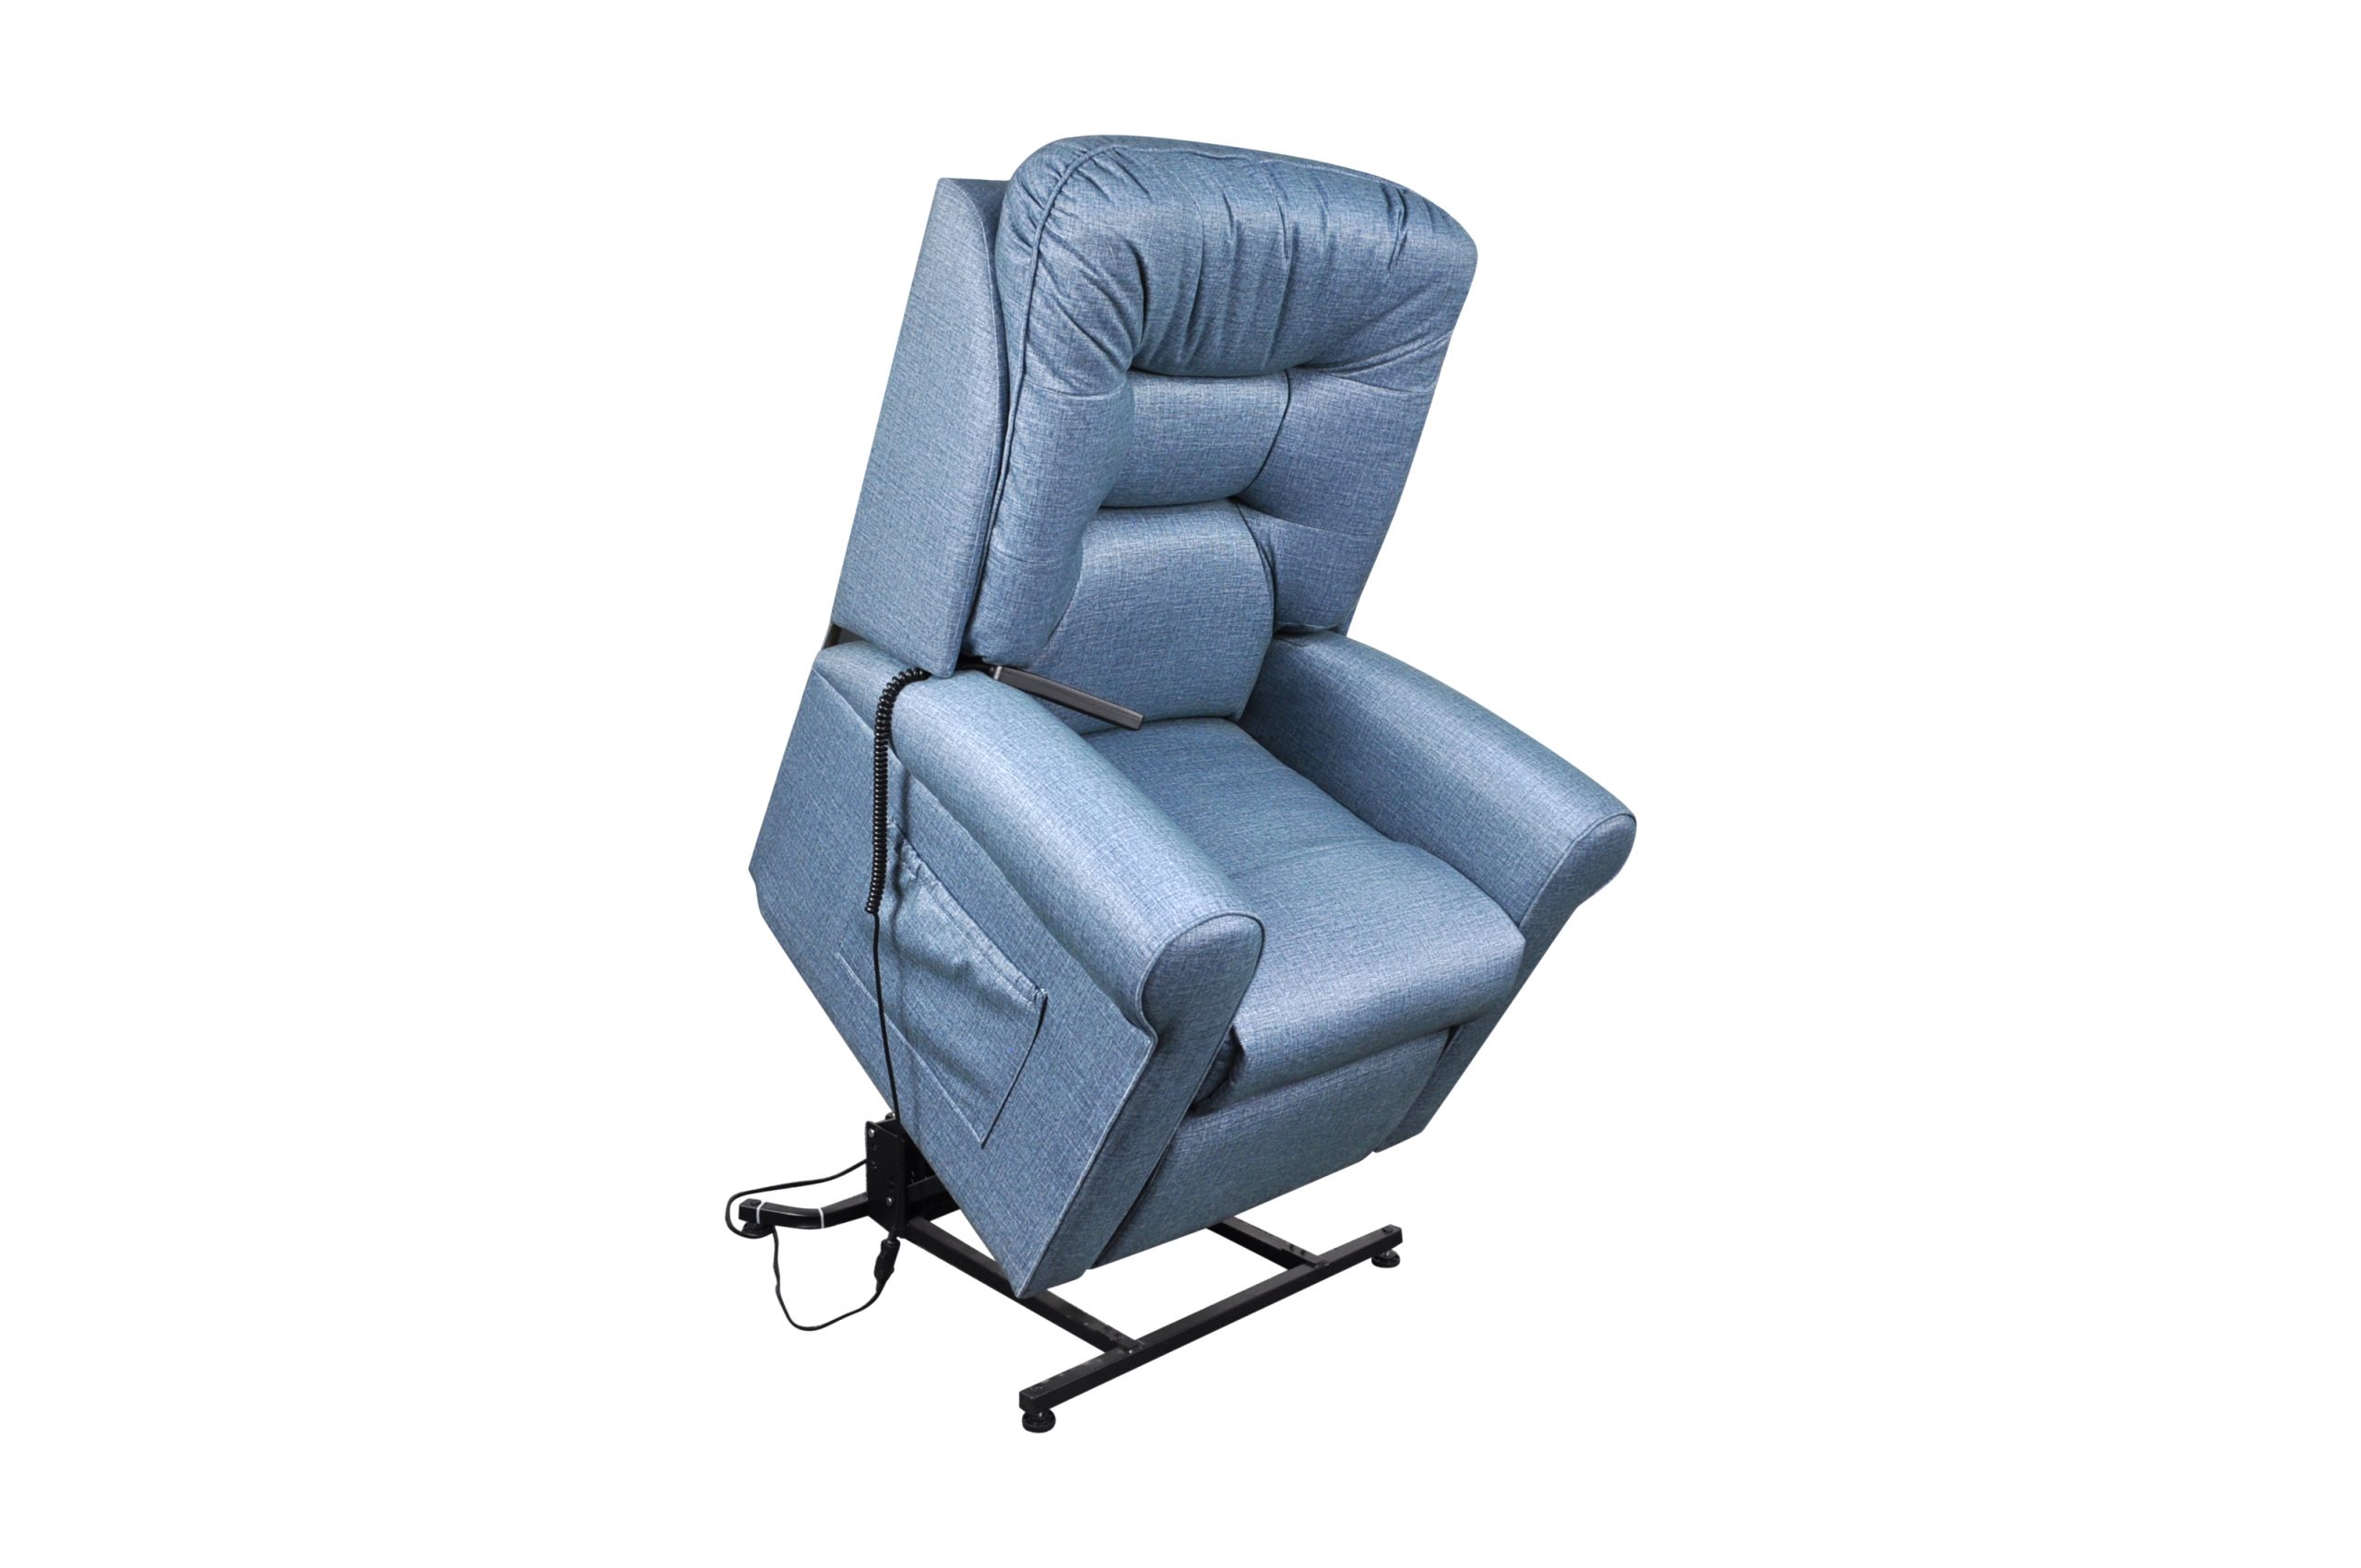 Bluesky Mobility Bogart- Tilt In Space Chair (Large)